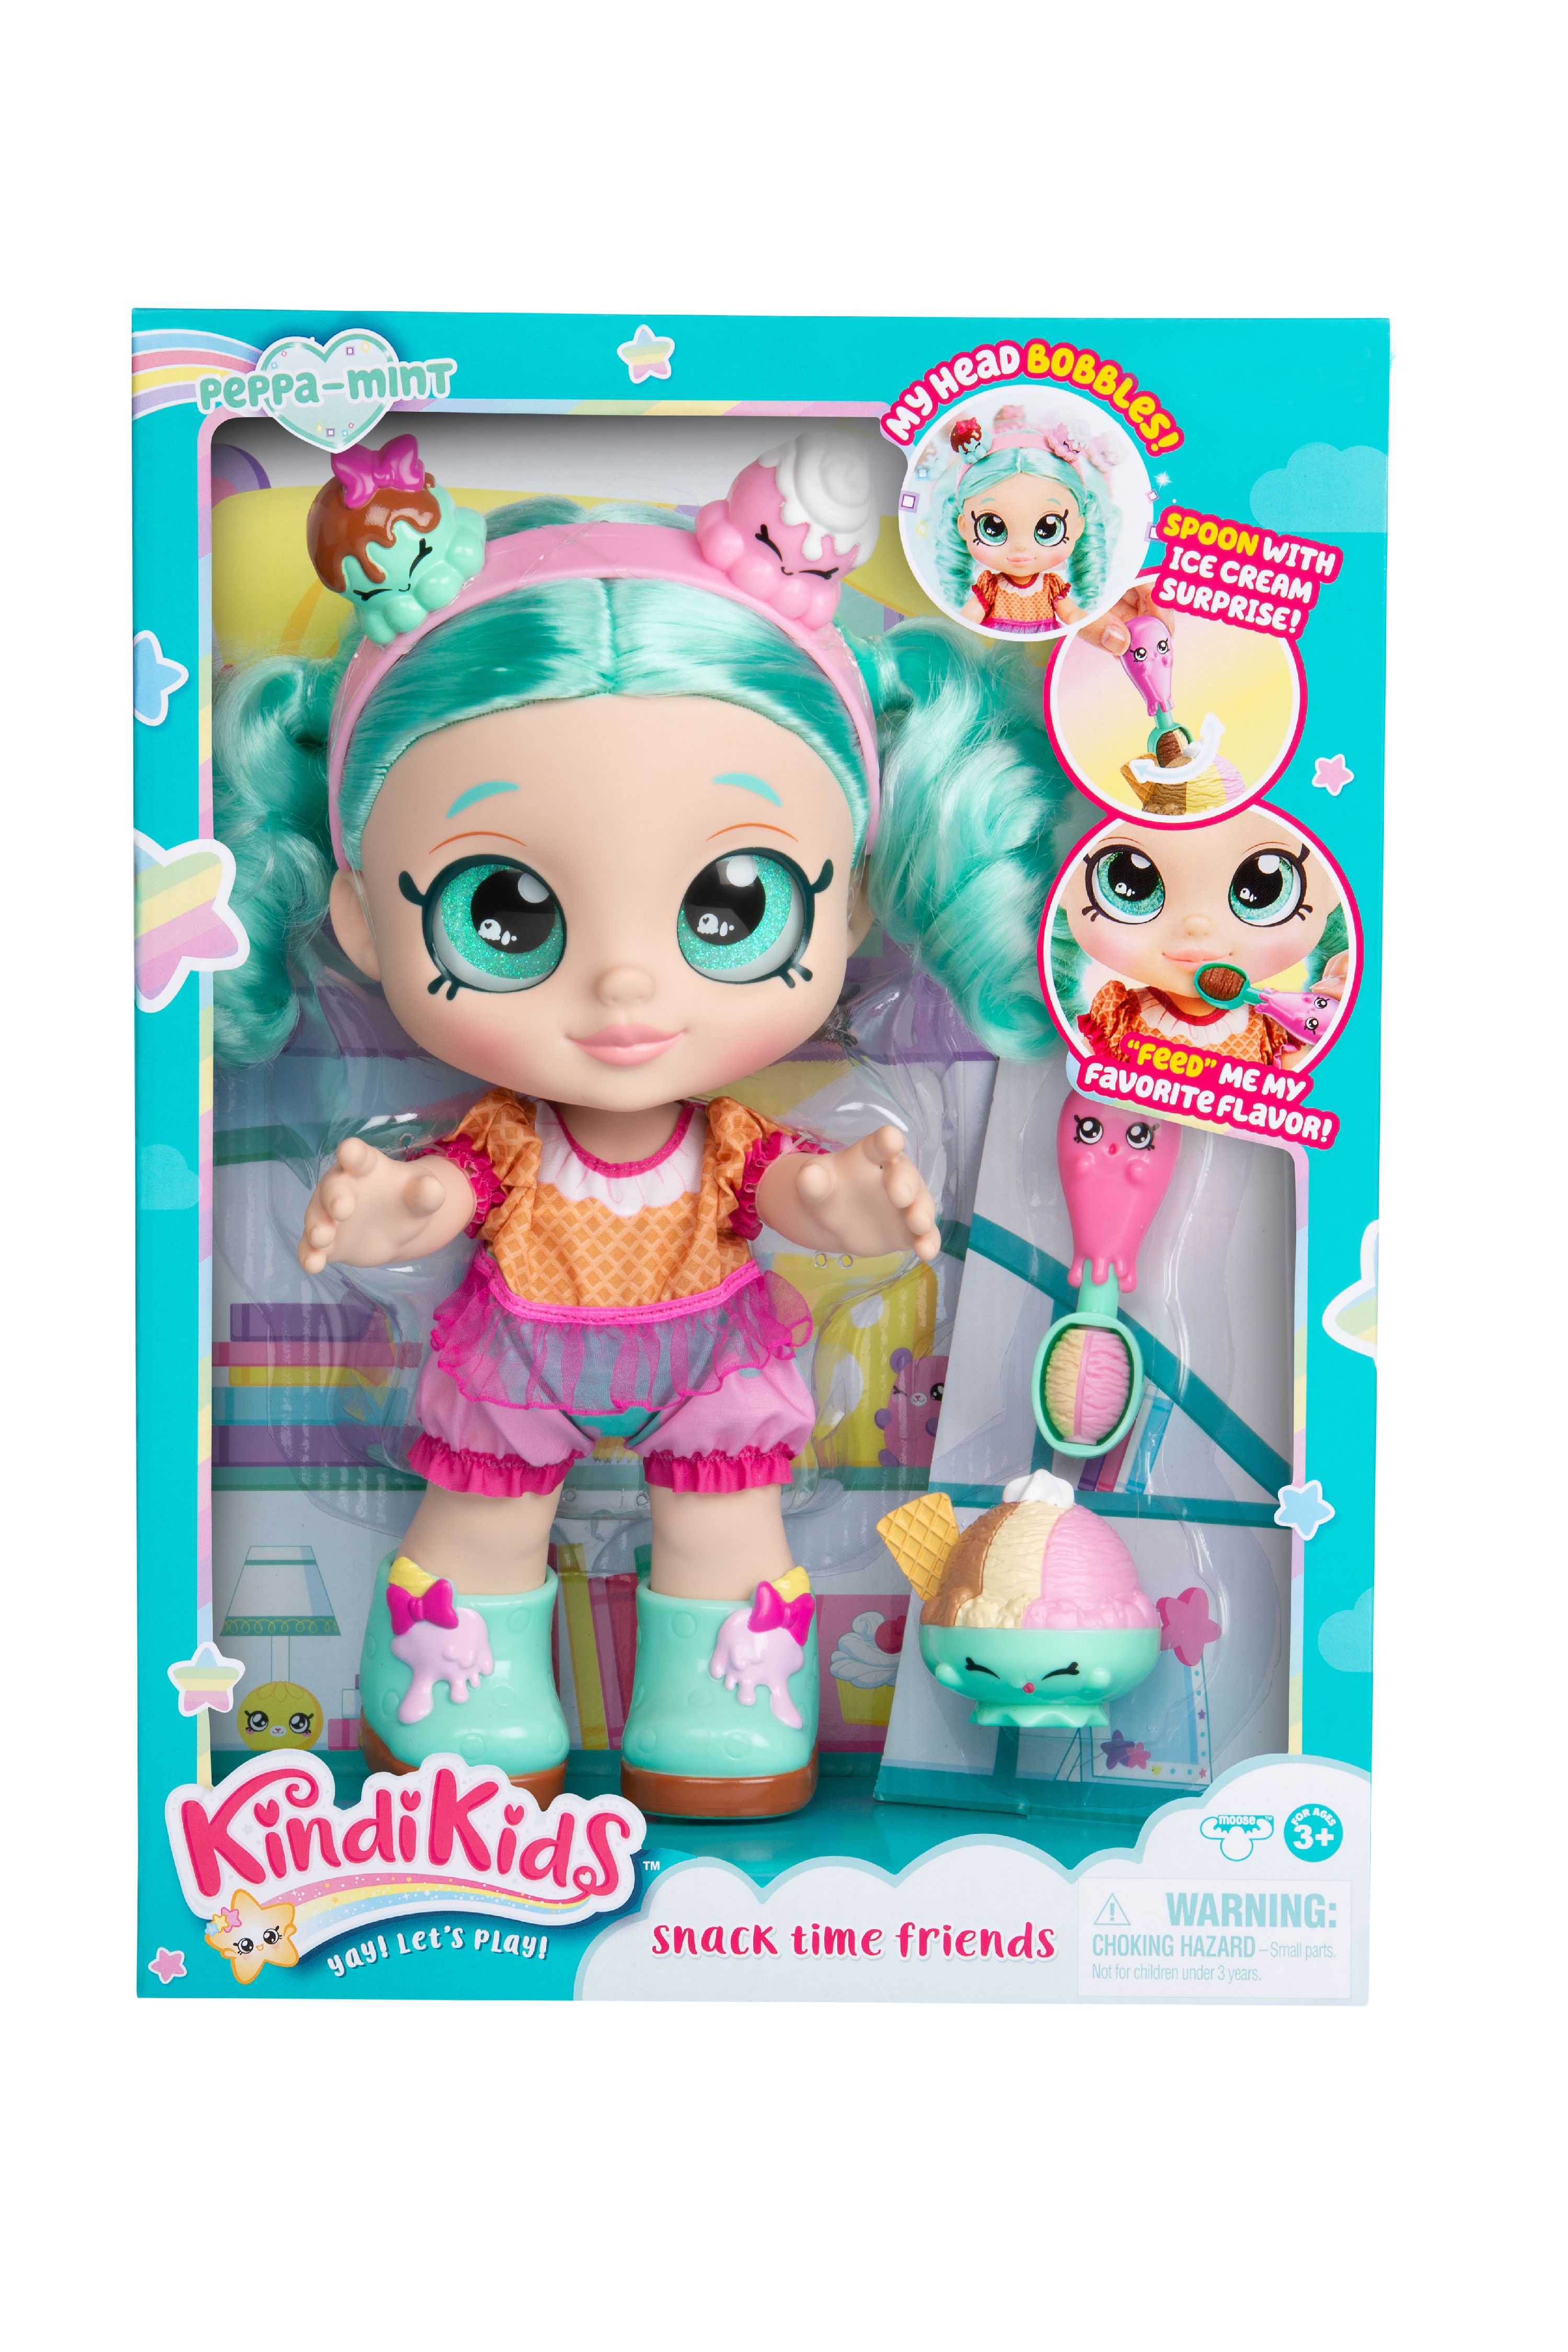 Kindi Kids Snack Time Friends 10" Doll, Peppa-Mint - image 3 of 6